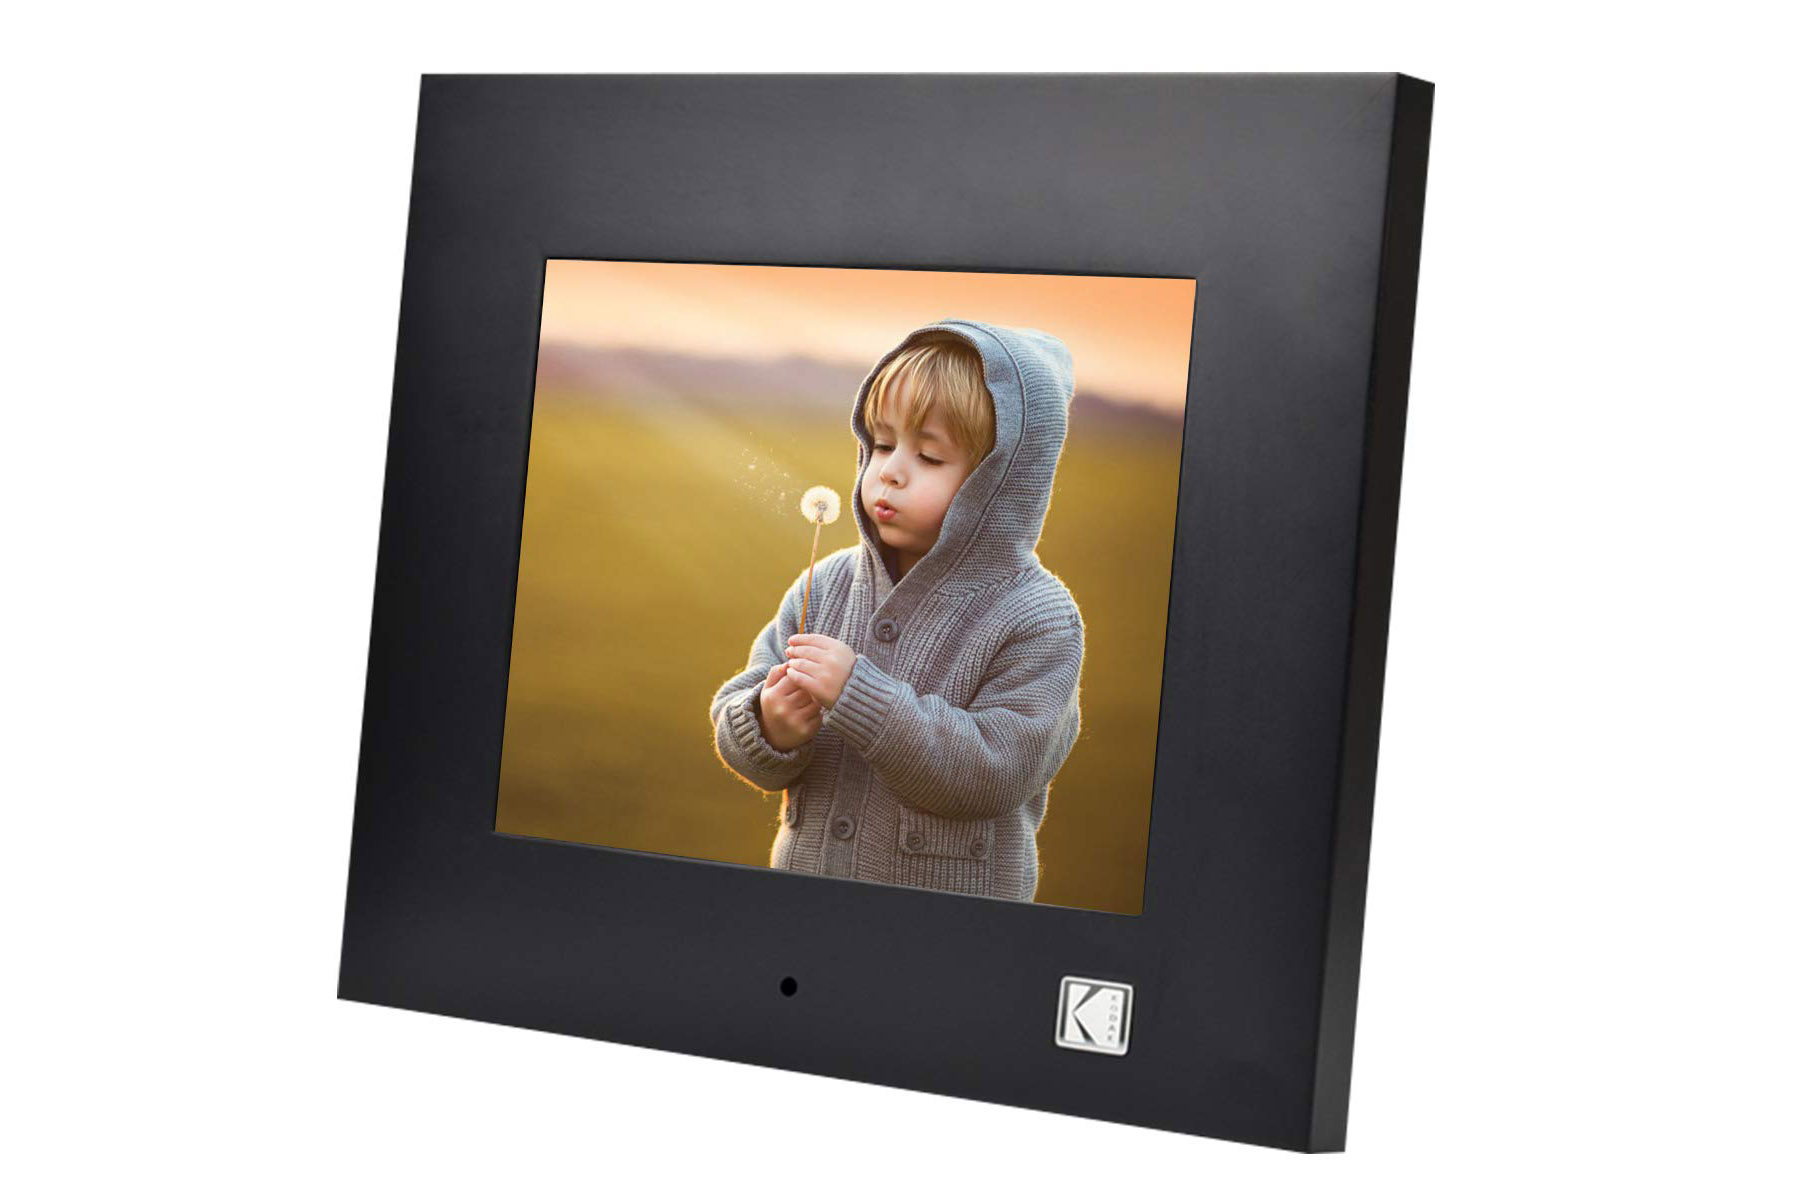 Photos - Other for Computer Kodak 1024 x 768 IPS Display 8" Digital Photo Frame Built in 8GB RDPF-802V 